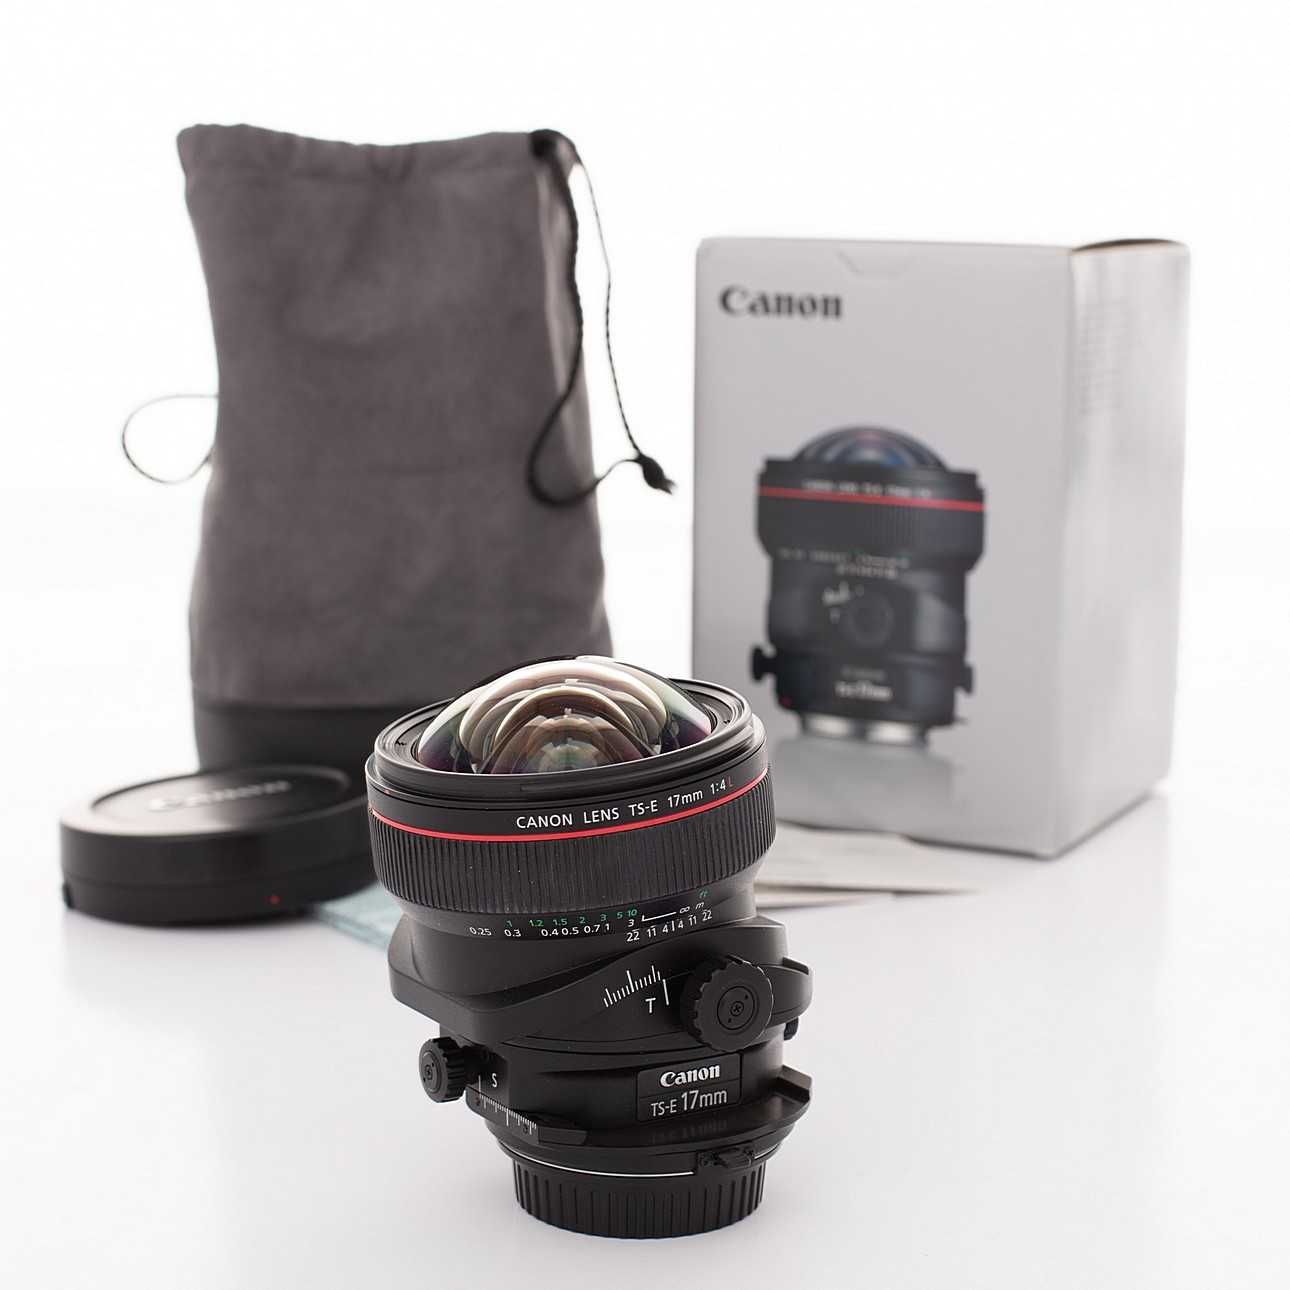 Obiektyw Canon Lens TS-E 17mm 1:4L  Tilt- Shift